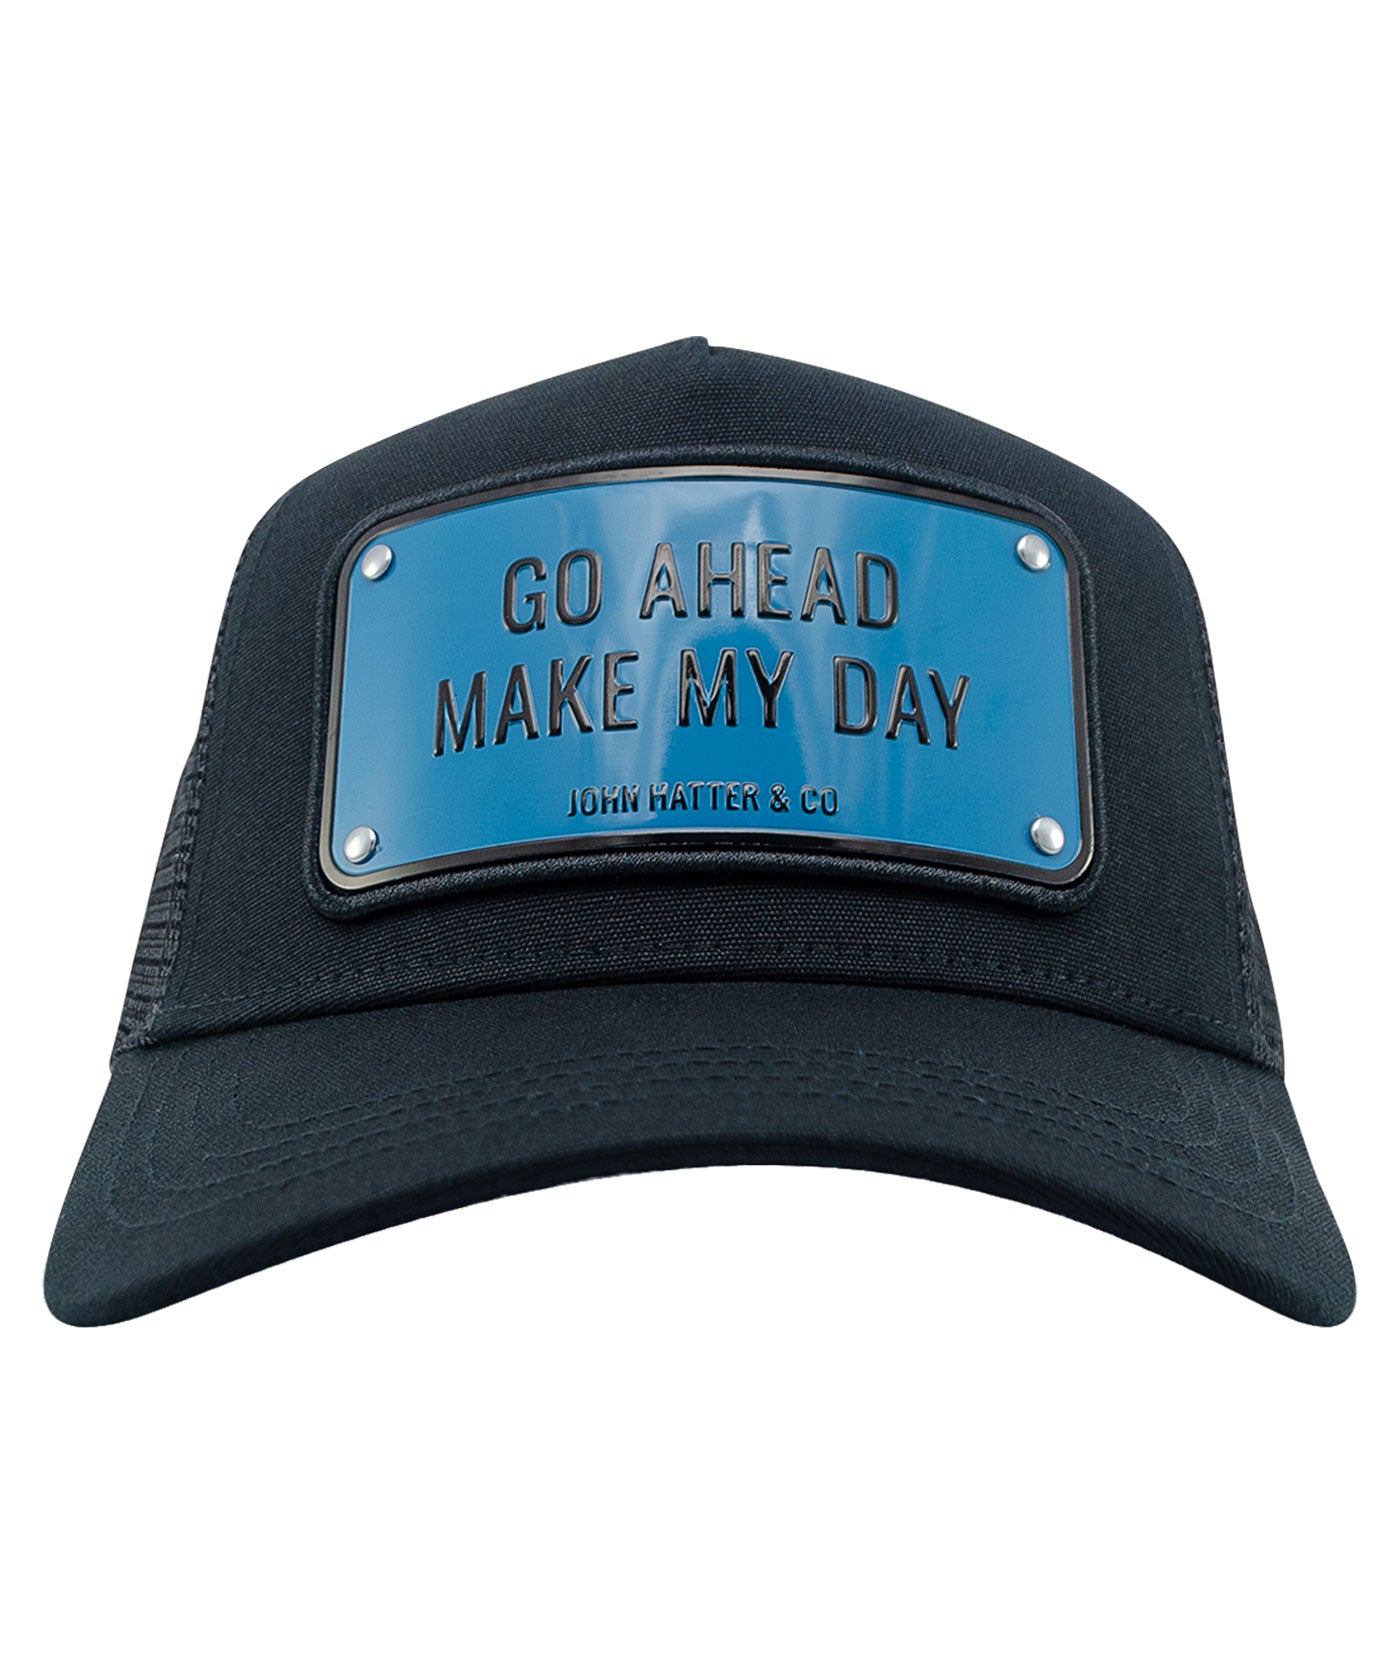 Work Hard Play Harder Blue Cap - Trucker Hat - John Hatter